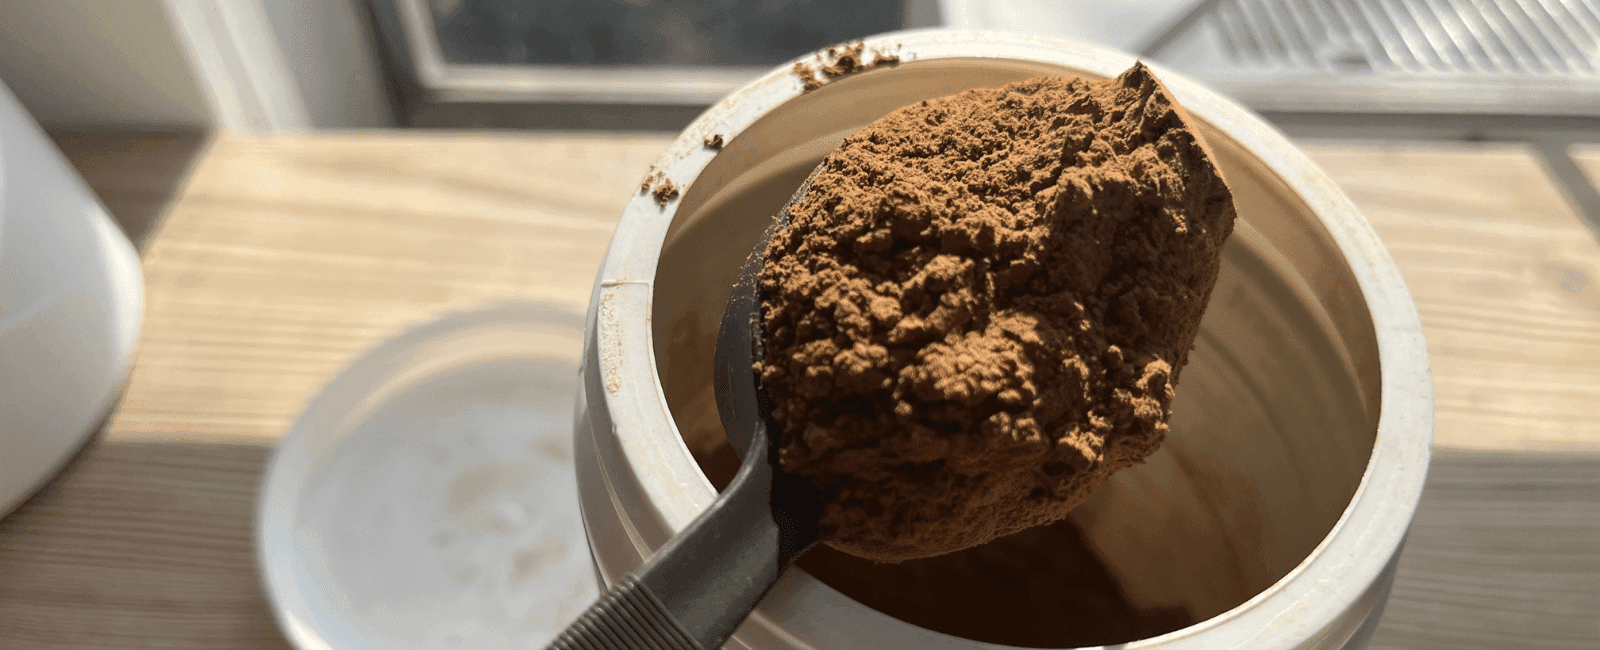 How to Make and Use Mushroom Powder at Home